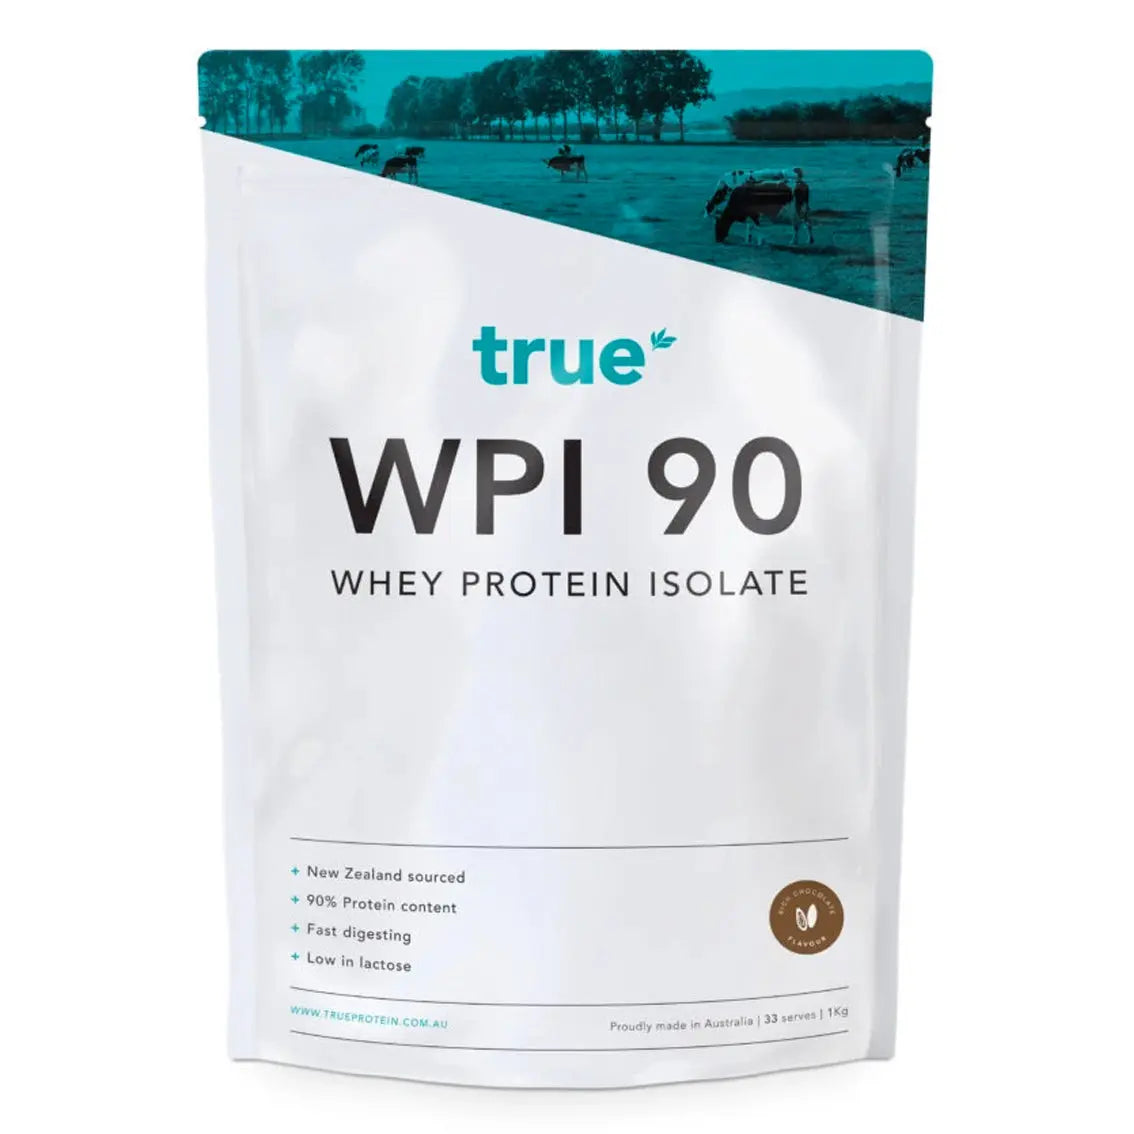 True Protein Whey Isolate WPI 90 - 1kg